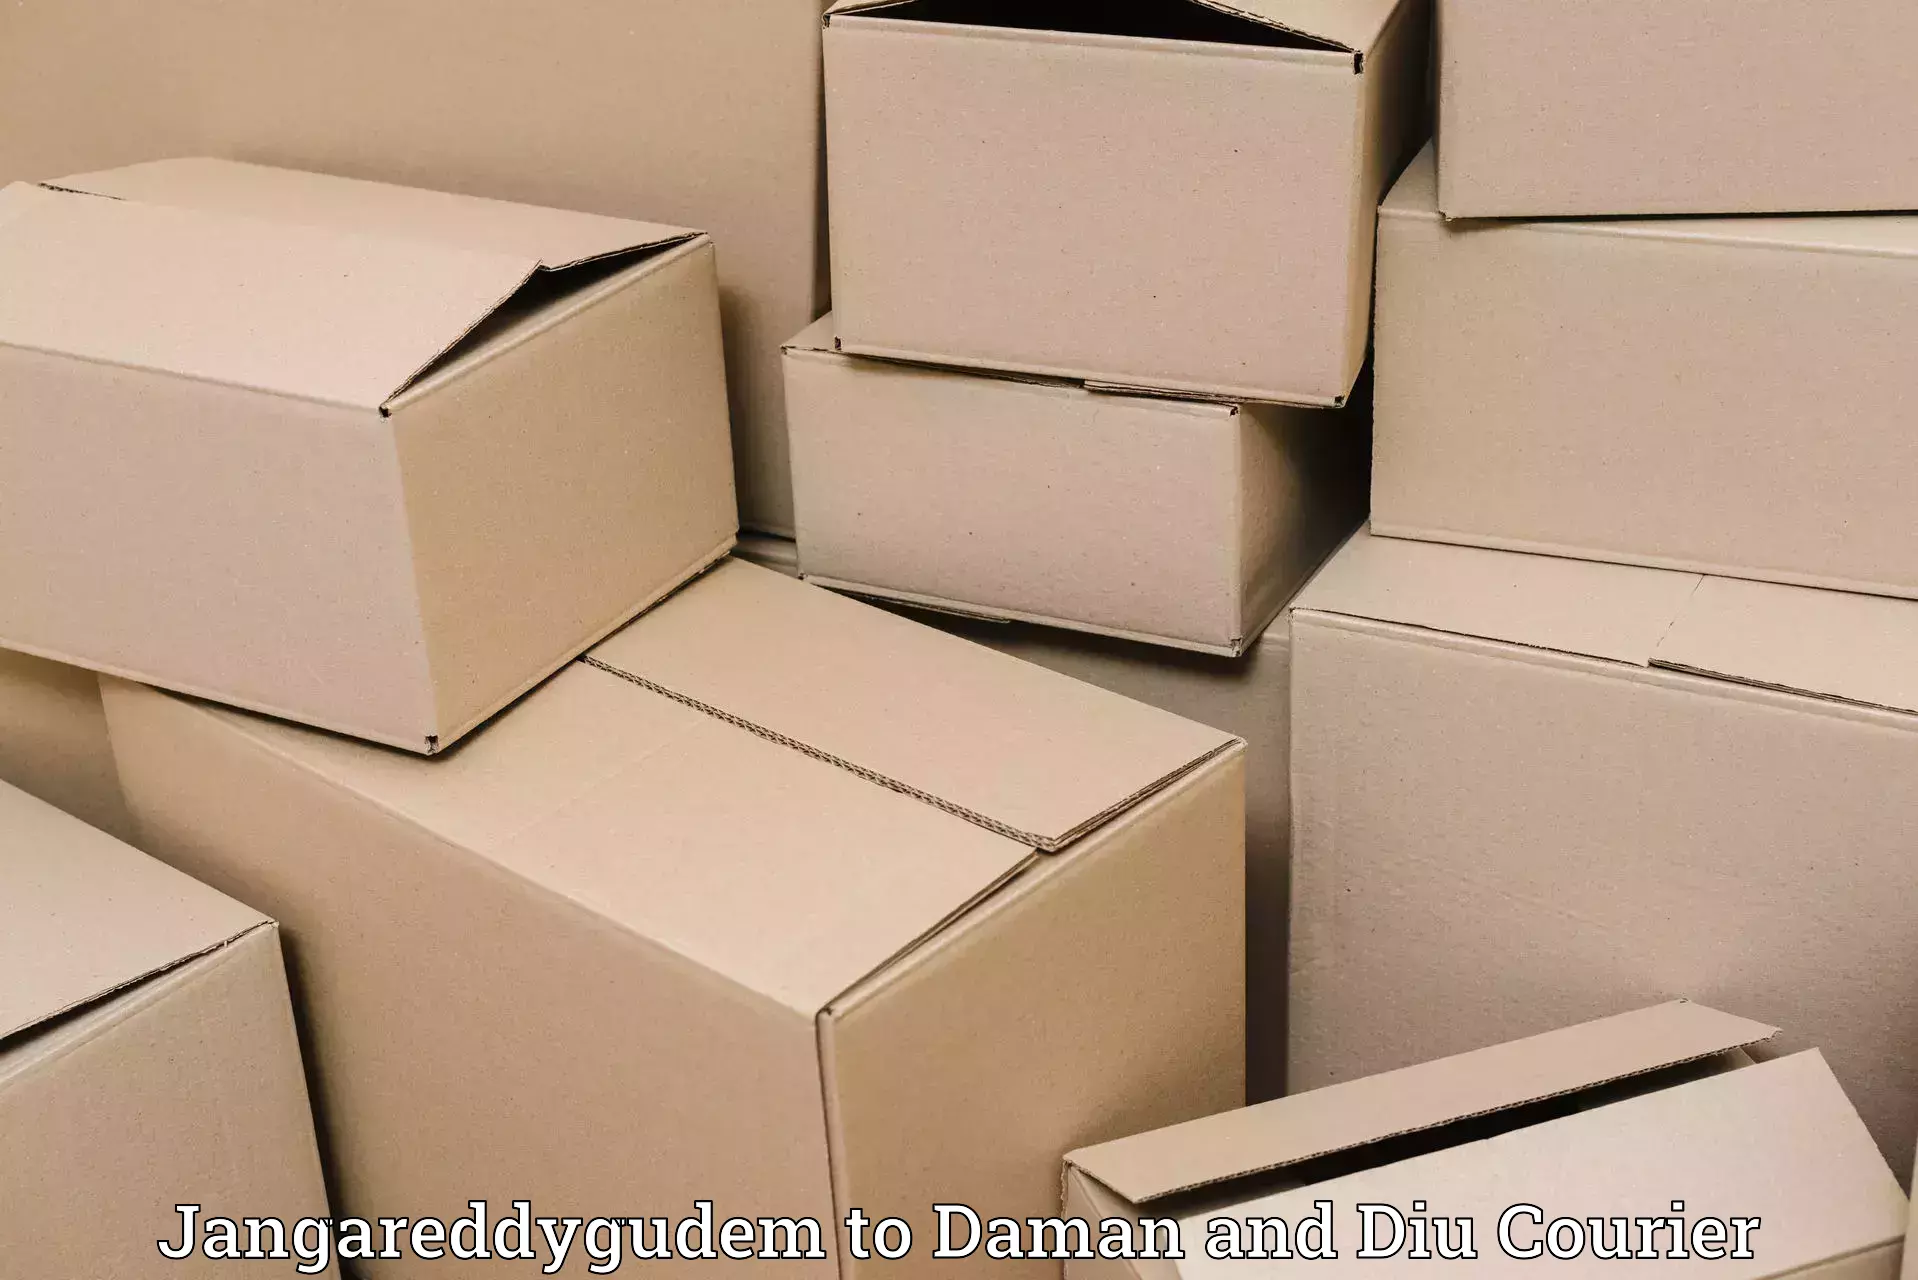 Efficient parcel service Jangareddygudem to Diu